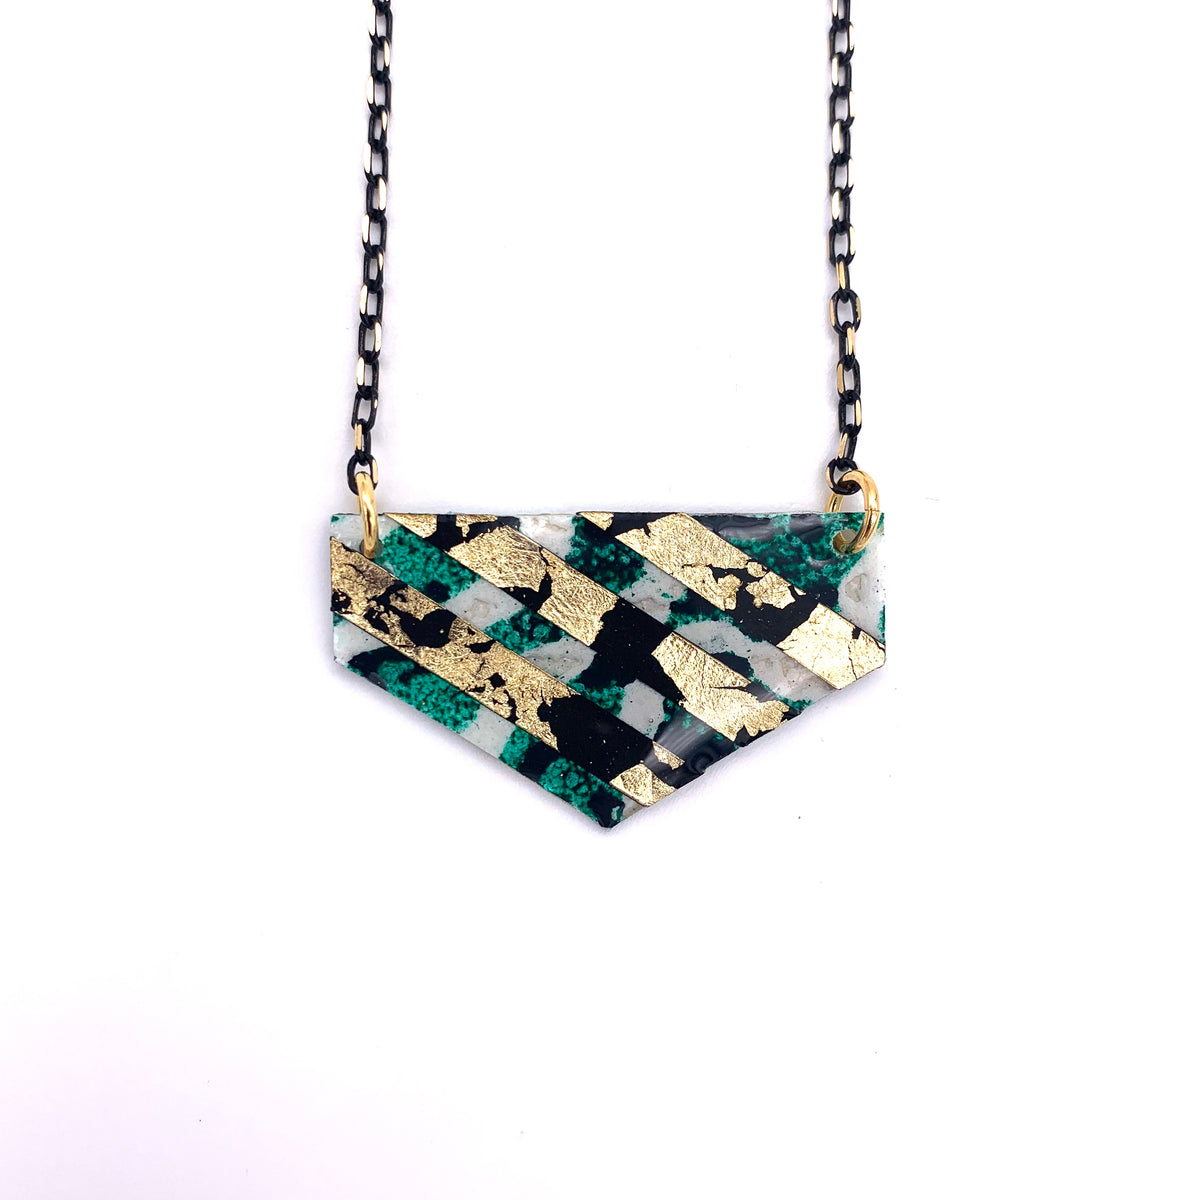 Ralston batik textile necklace in dark green/black/gold